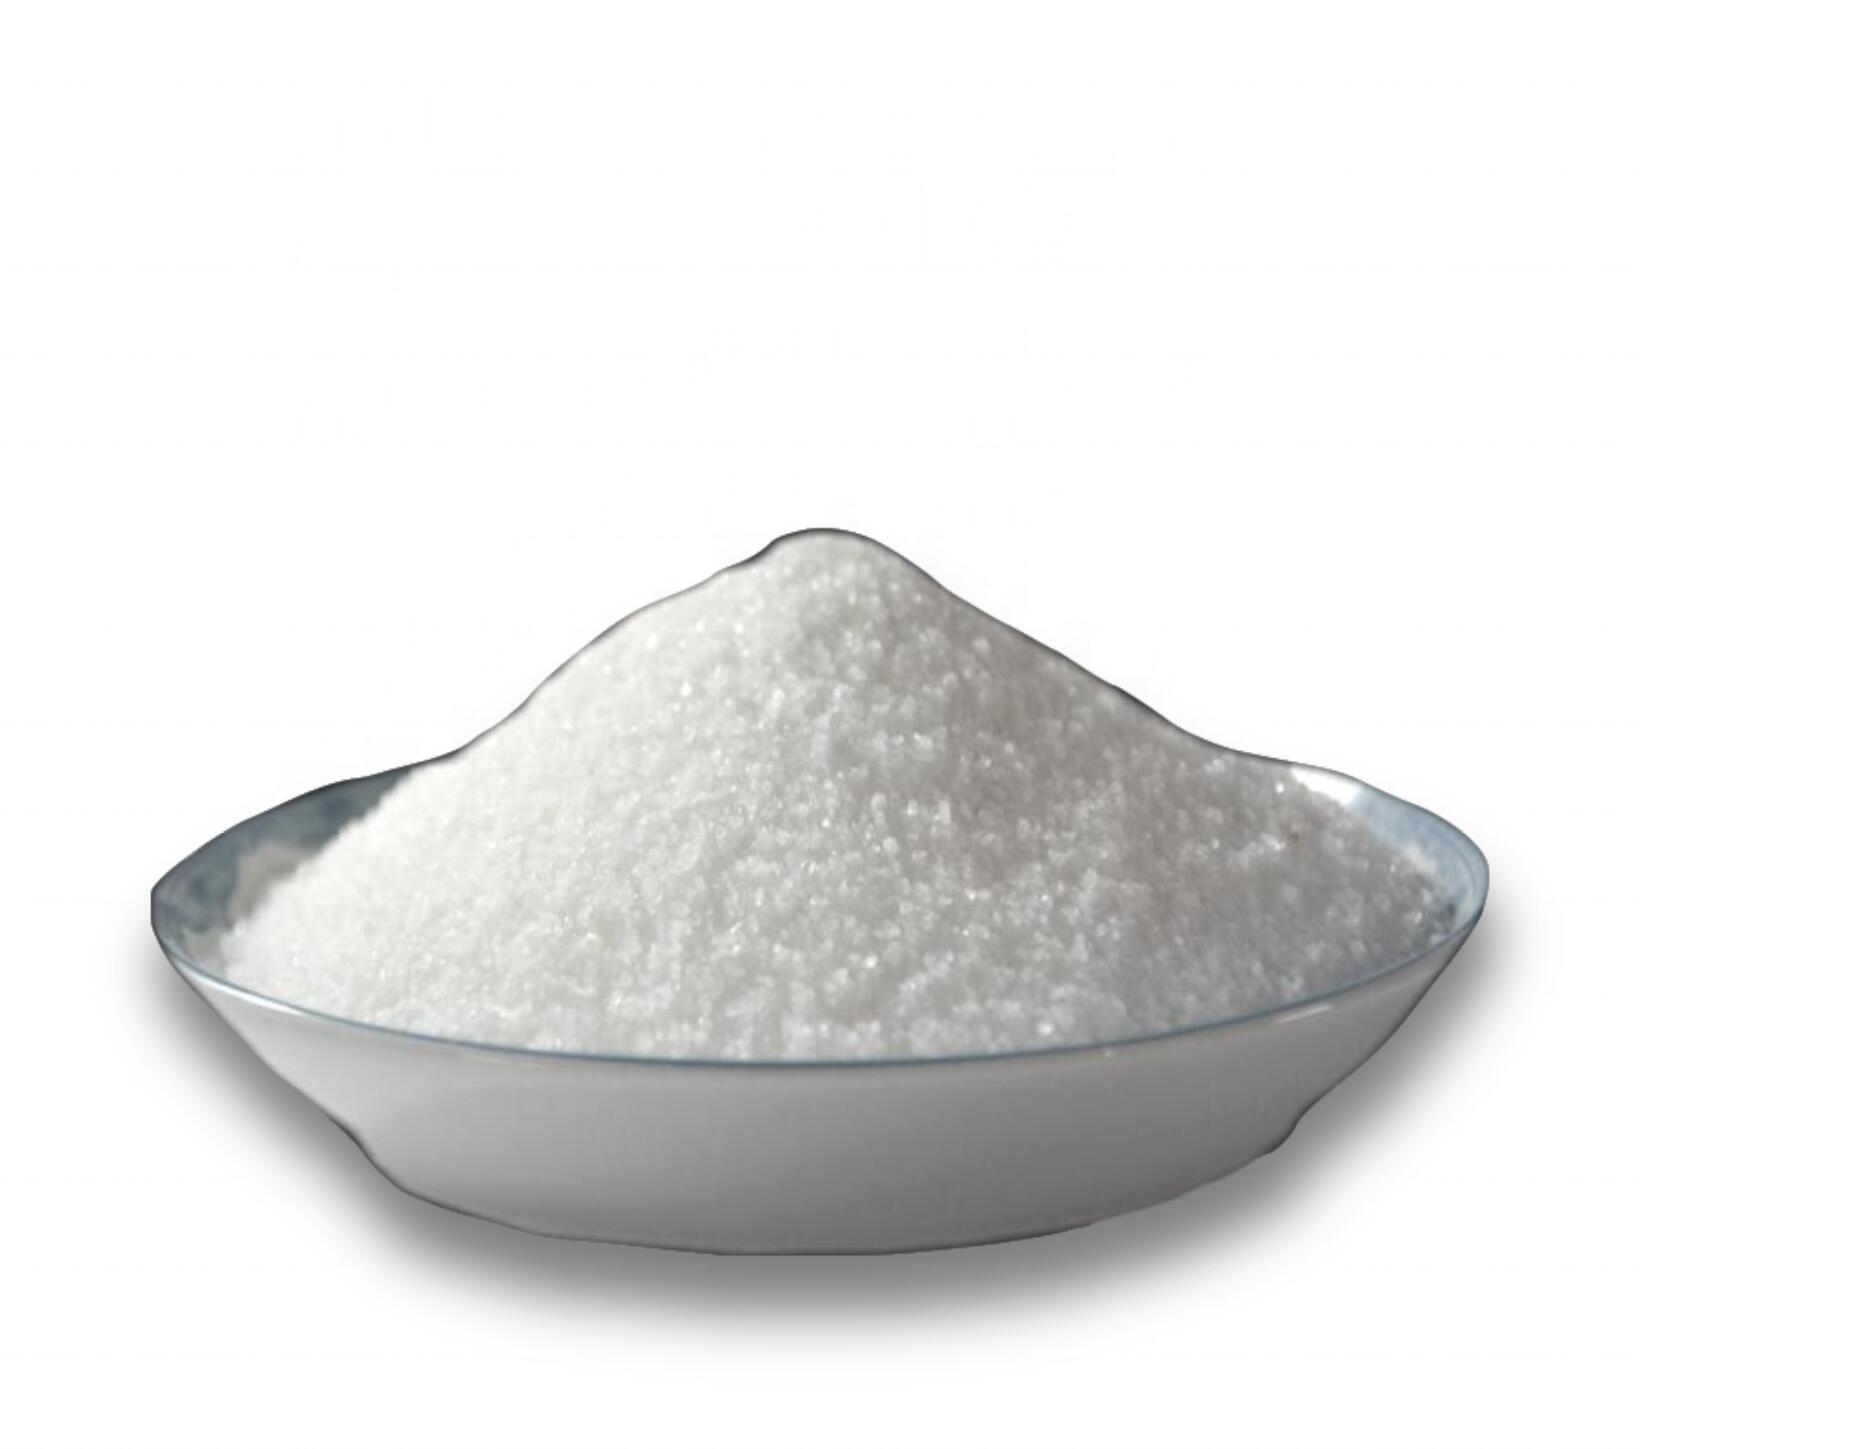 High Purity Tauroursodeoxycholic Acid powder Cas14605-22-2 